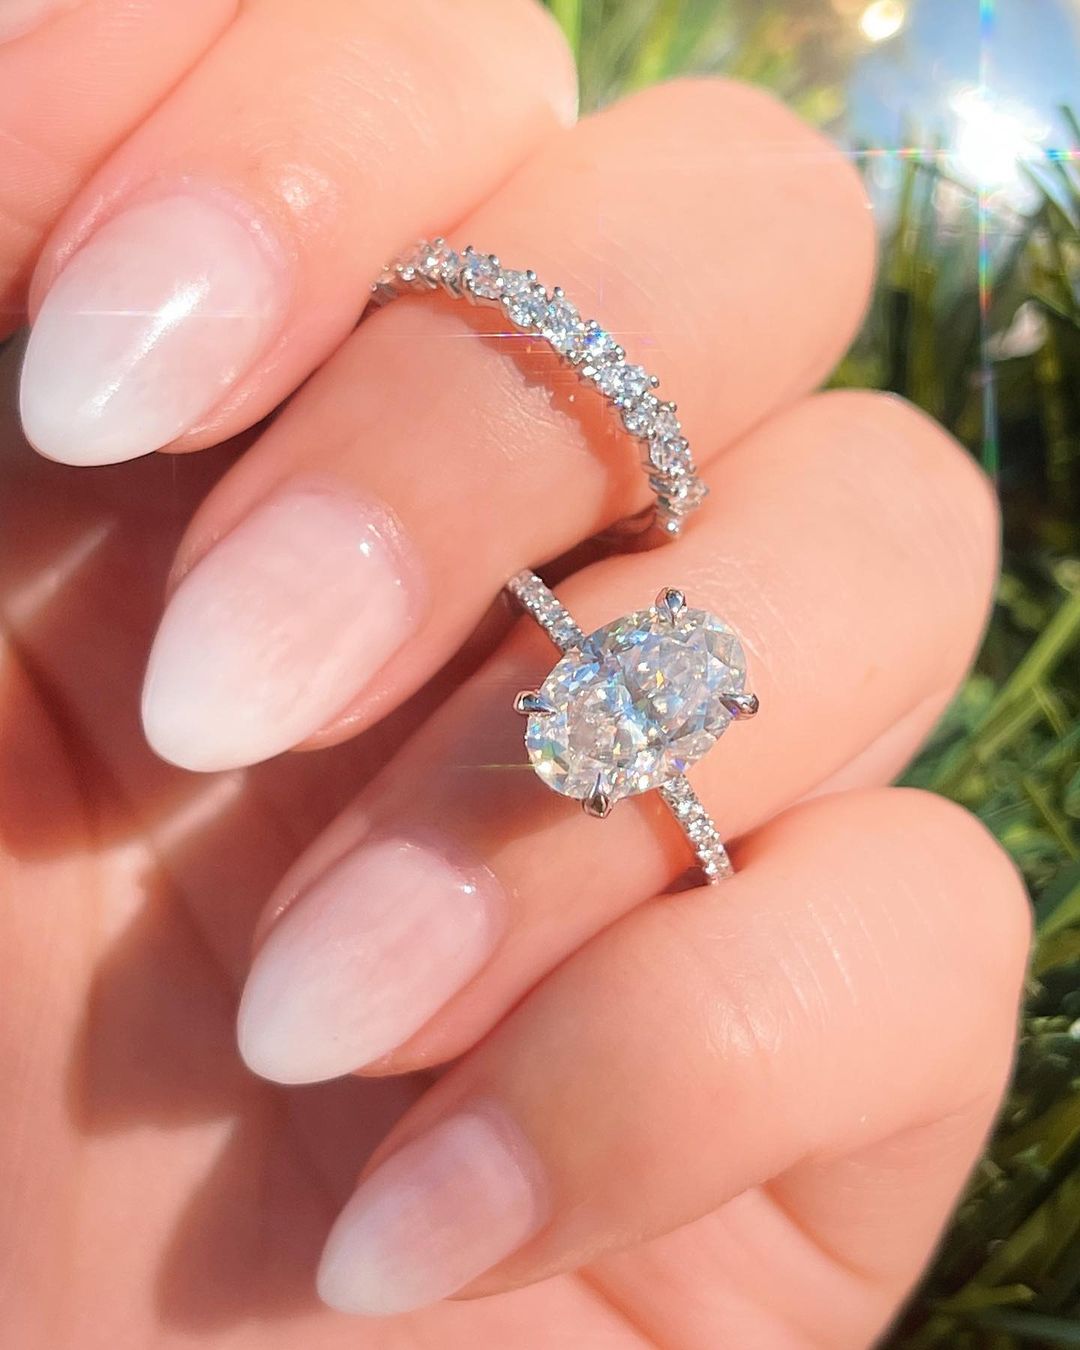 INSTORE Design Awards 2021 - Best Engagement/Wedding Jewelry Under $5,000